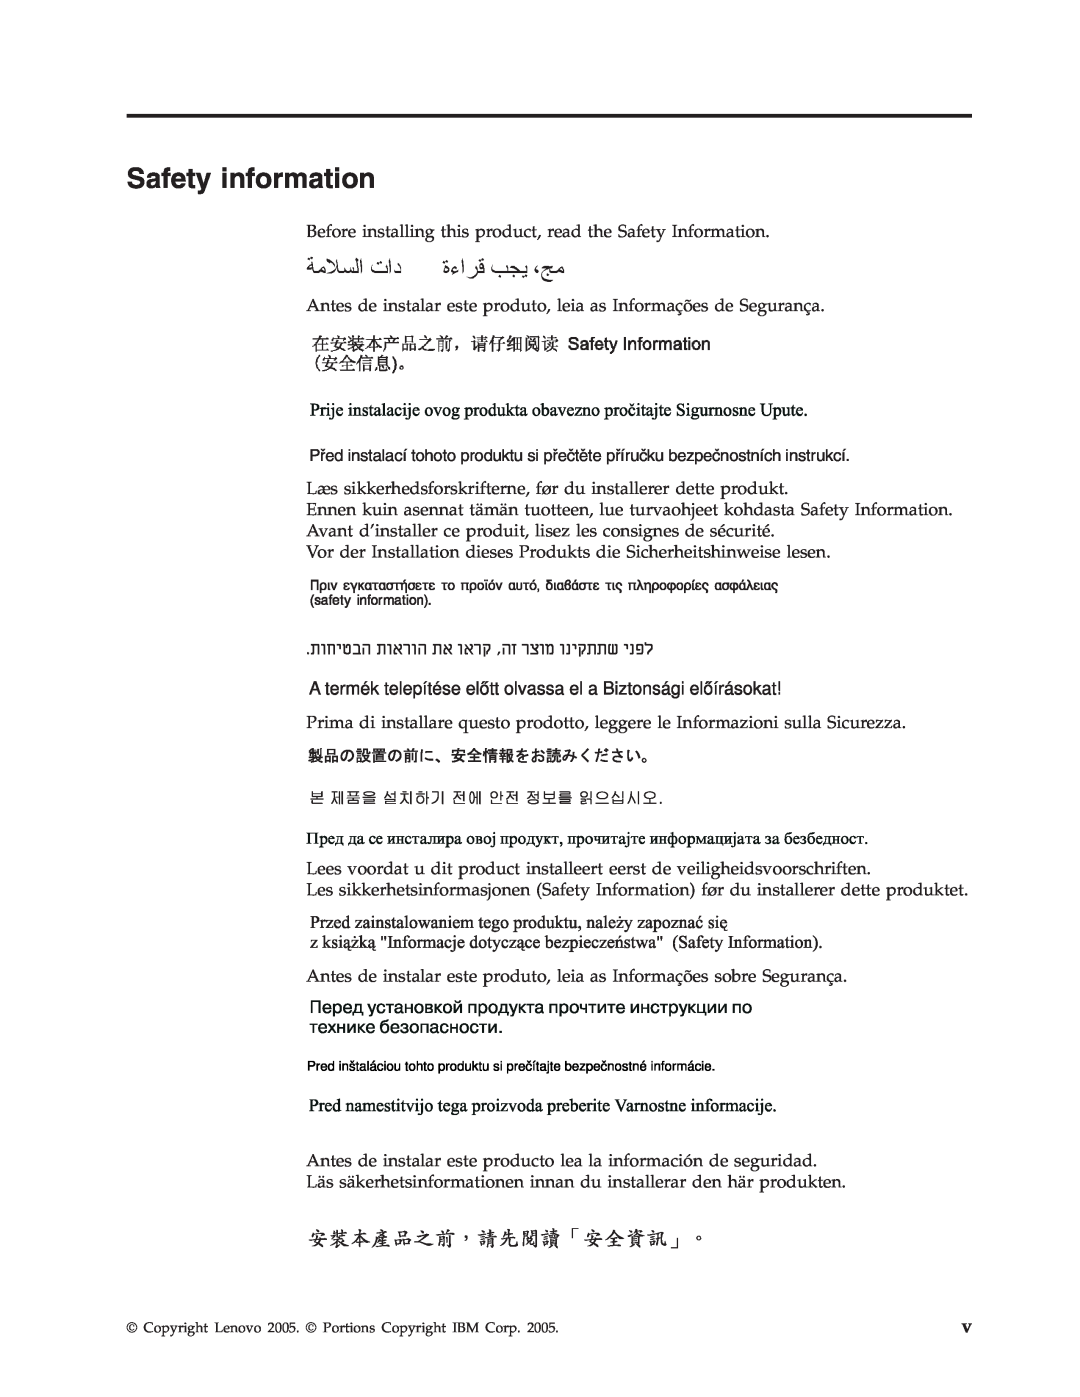 Lenovo L151 manual Safety information 